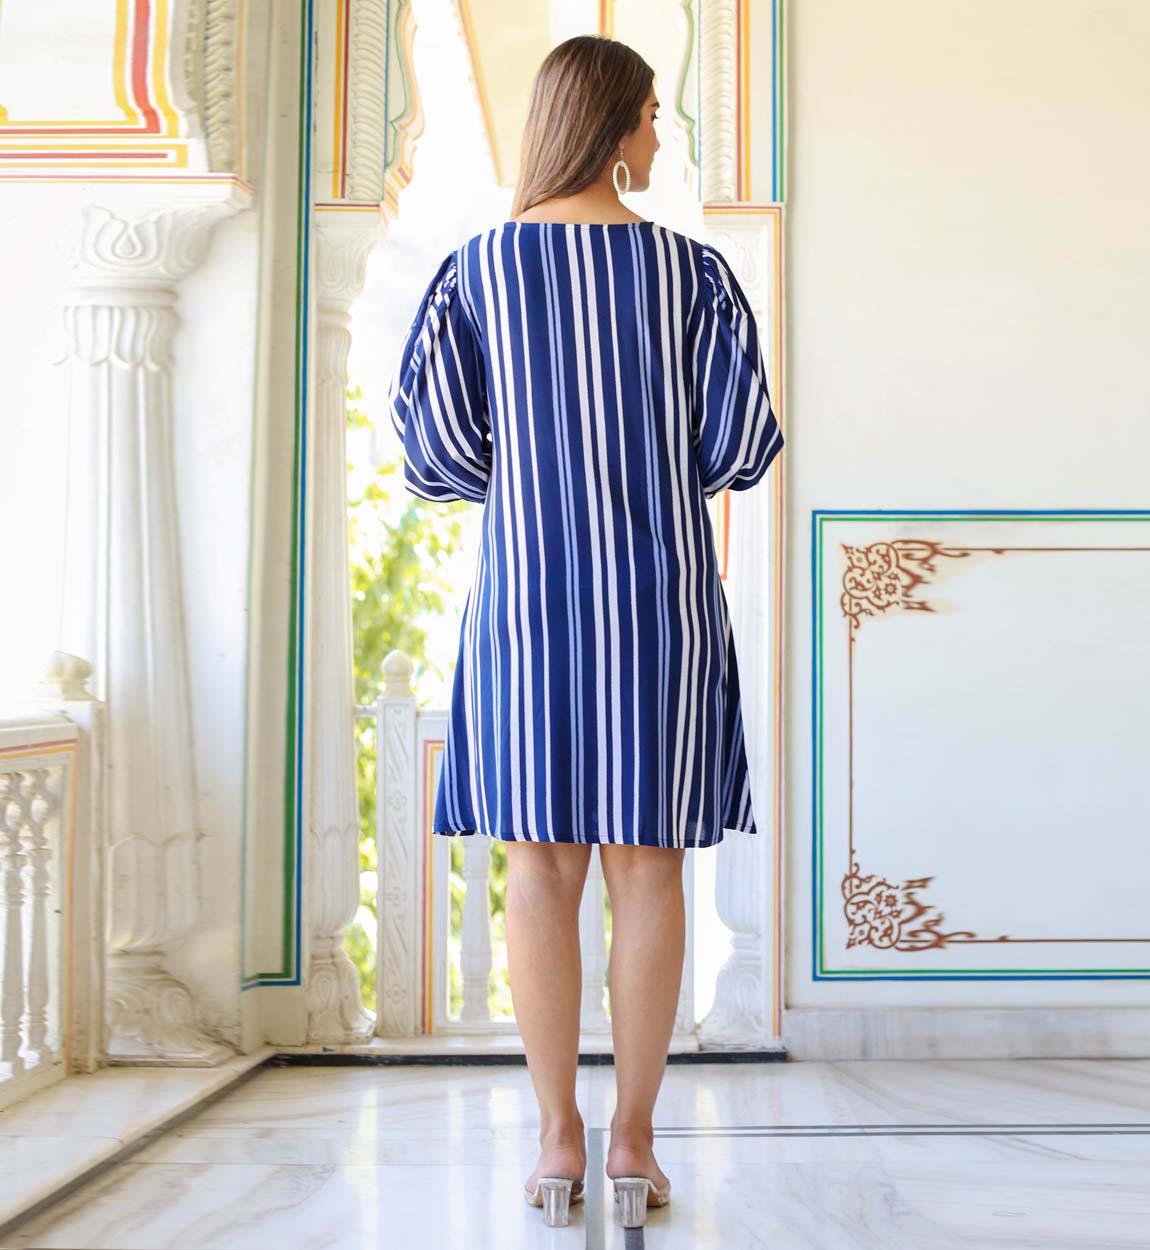 Yash Gallery Women's Stripe Printed A-line Dress